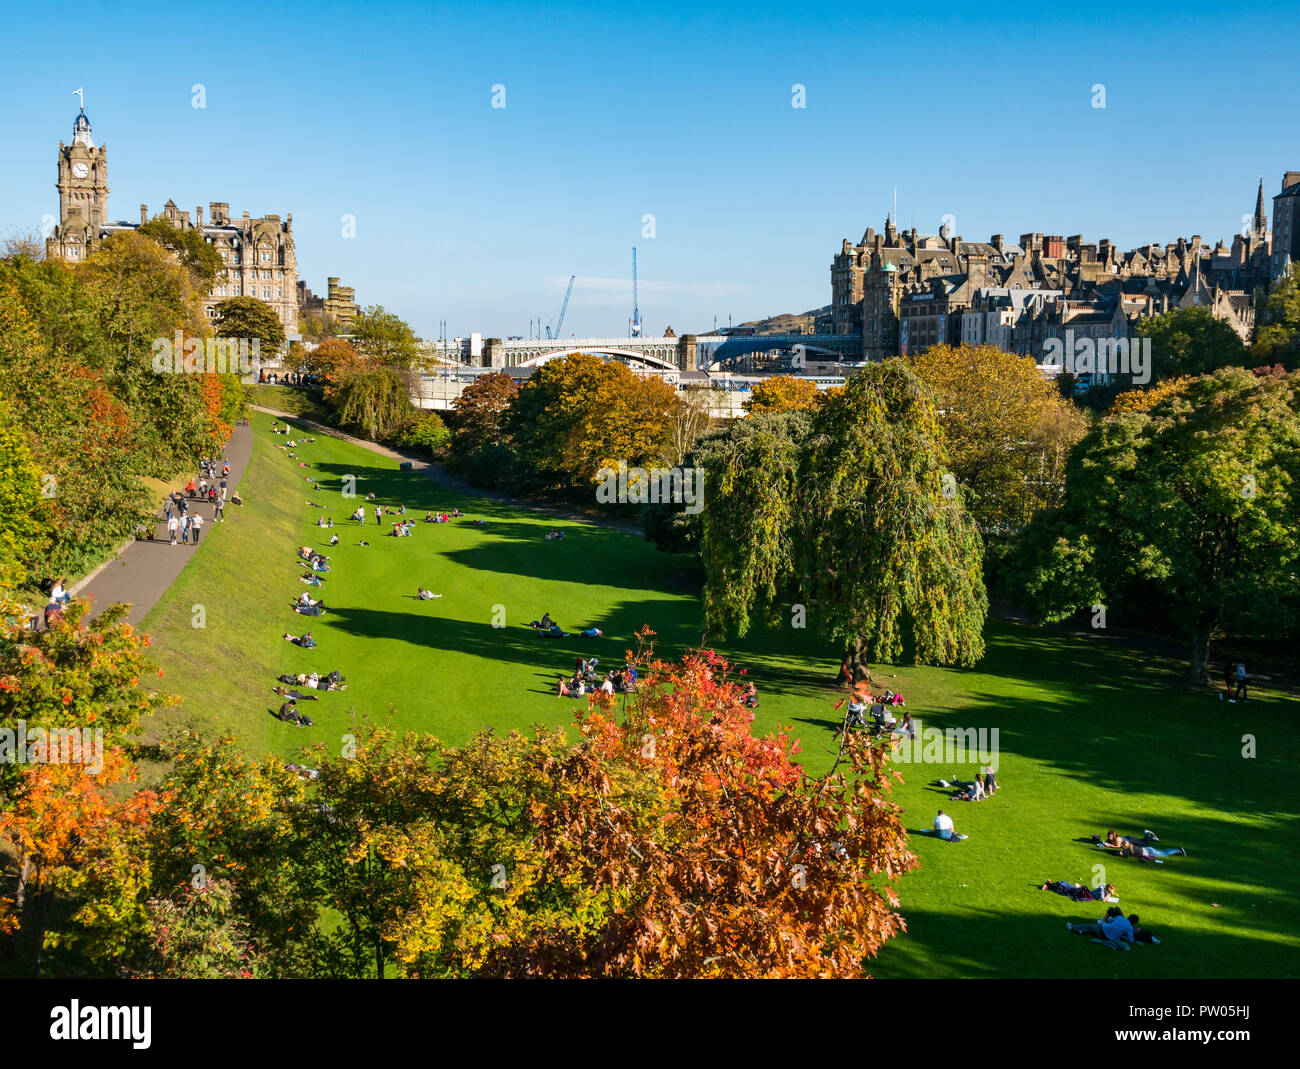 People sitting in Princes Street Gardens in Autumn sun with Balmoral Hotel clock tower and North Bridge, Edinburgh, Scotland, UK Stock Photo